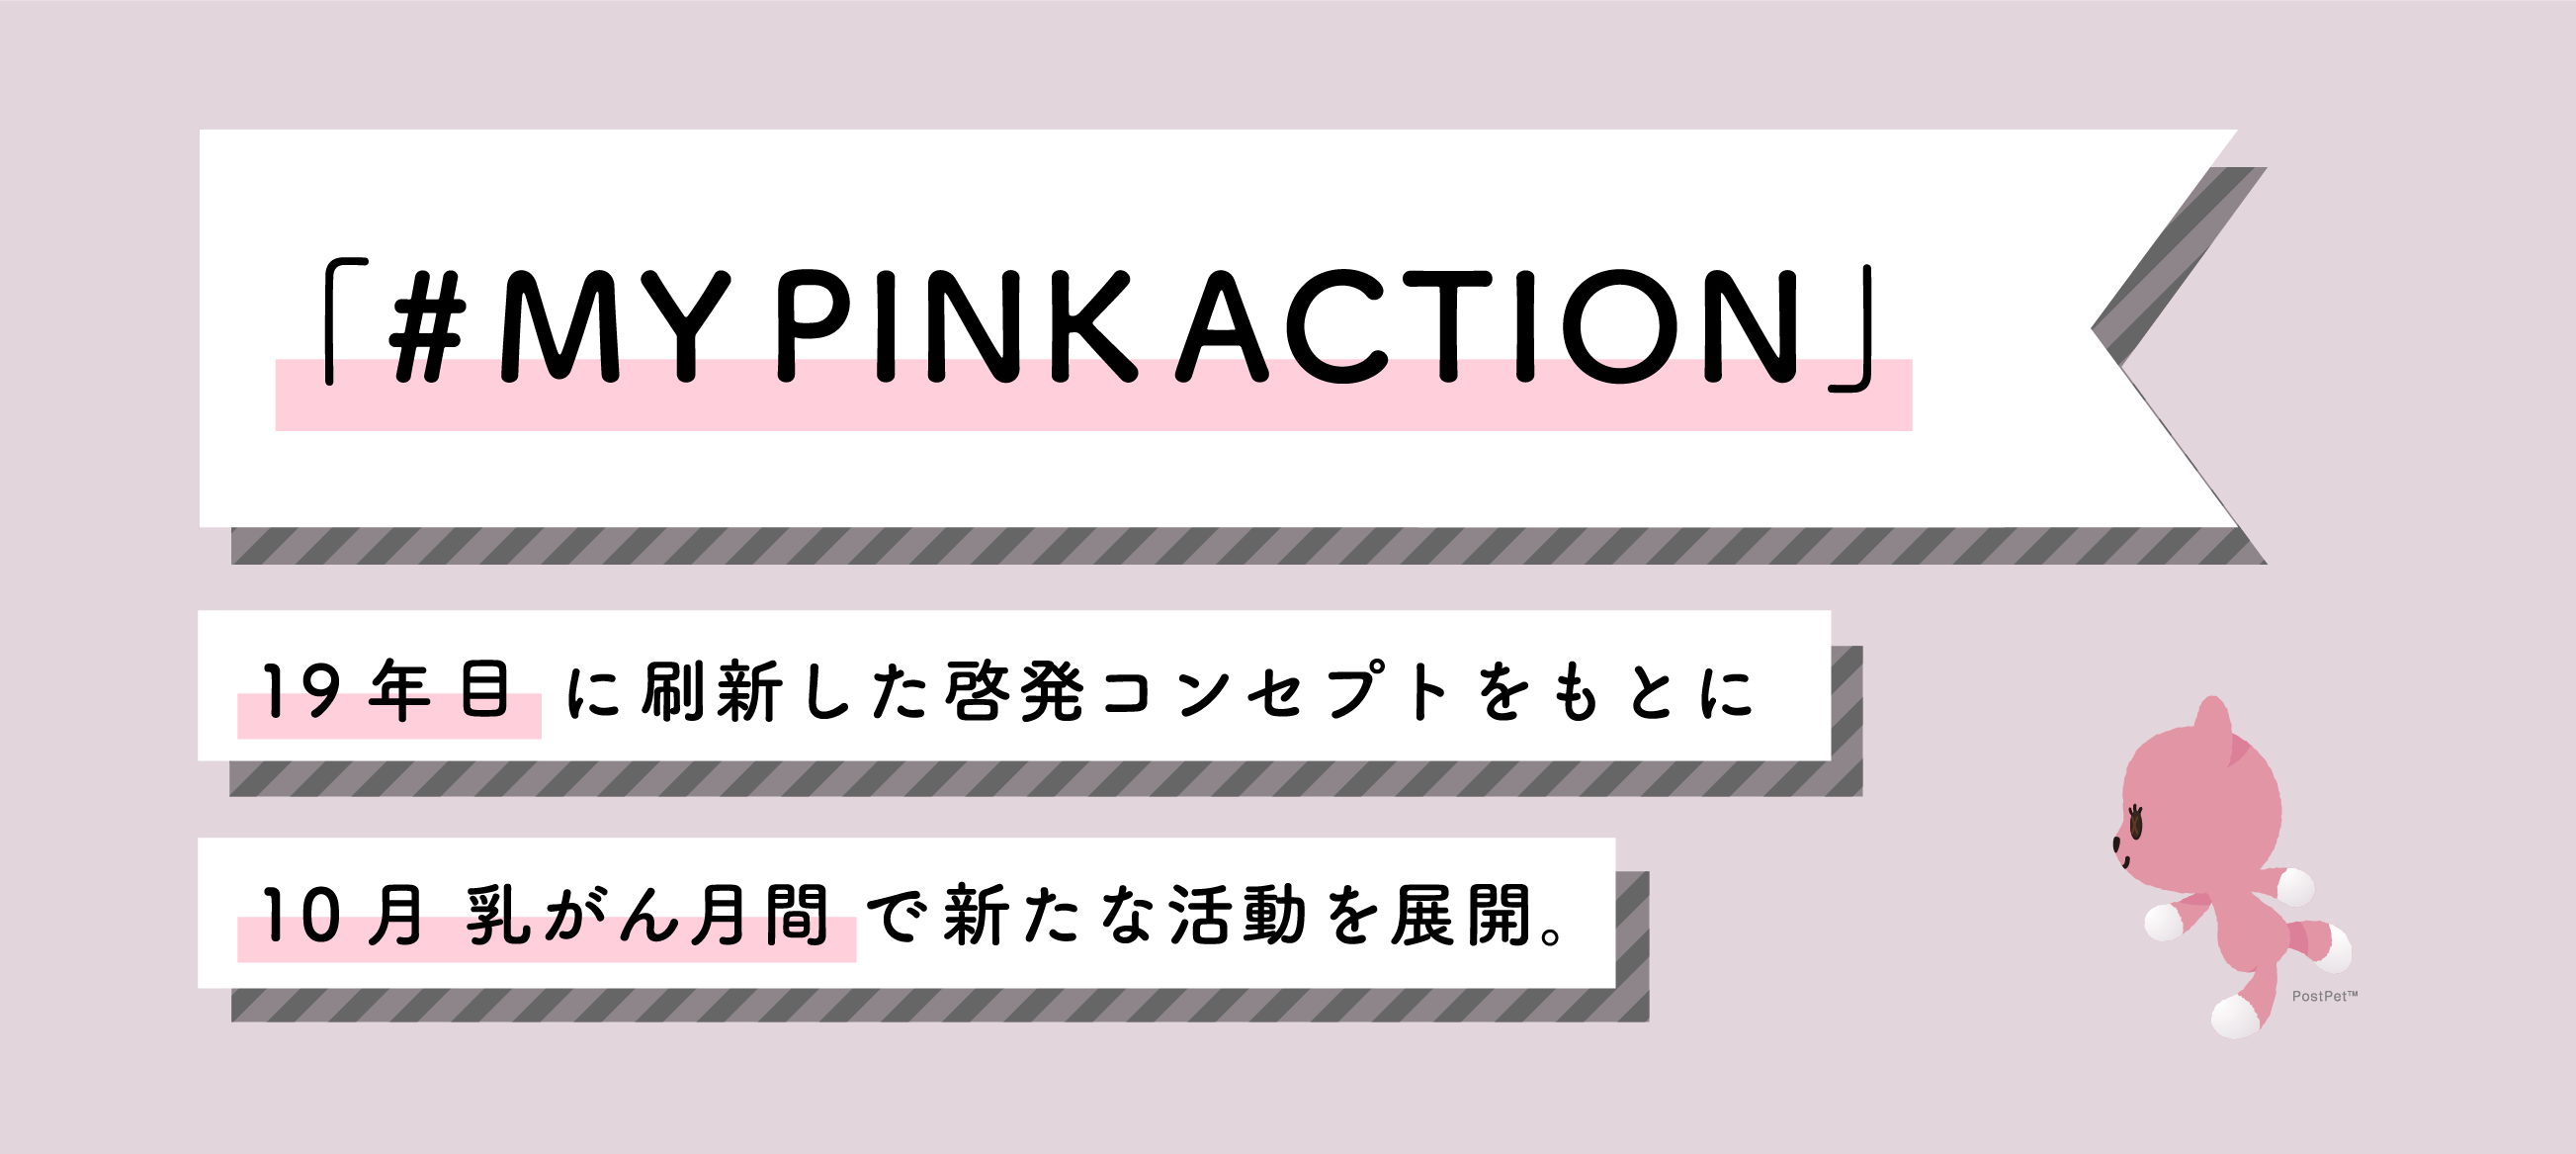 MY PINK ACTION 19年ぶりに刷新した啓発コンセプトをもとに、10月、乳がん月間で新たな活動を展開。